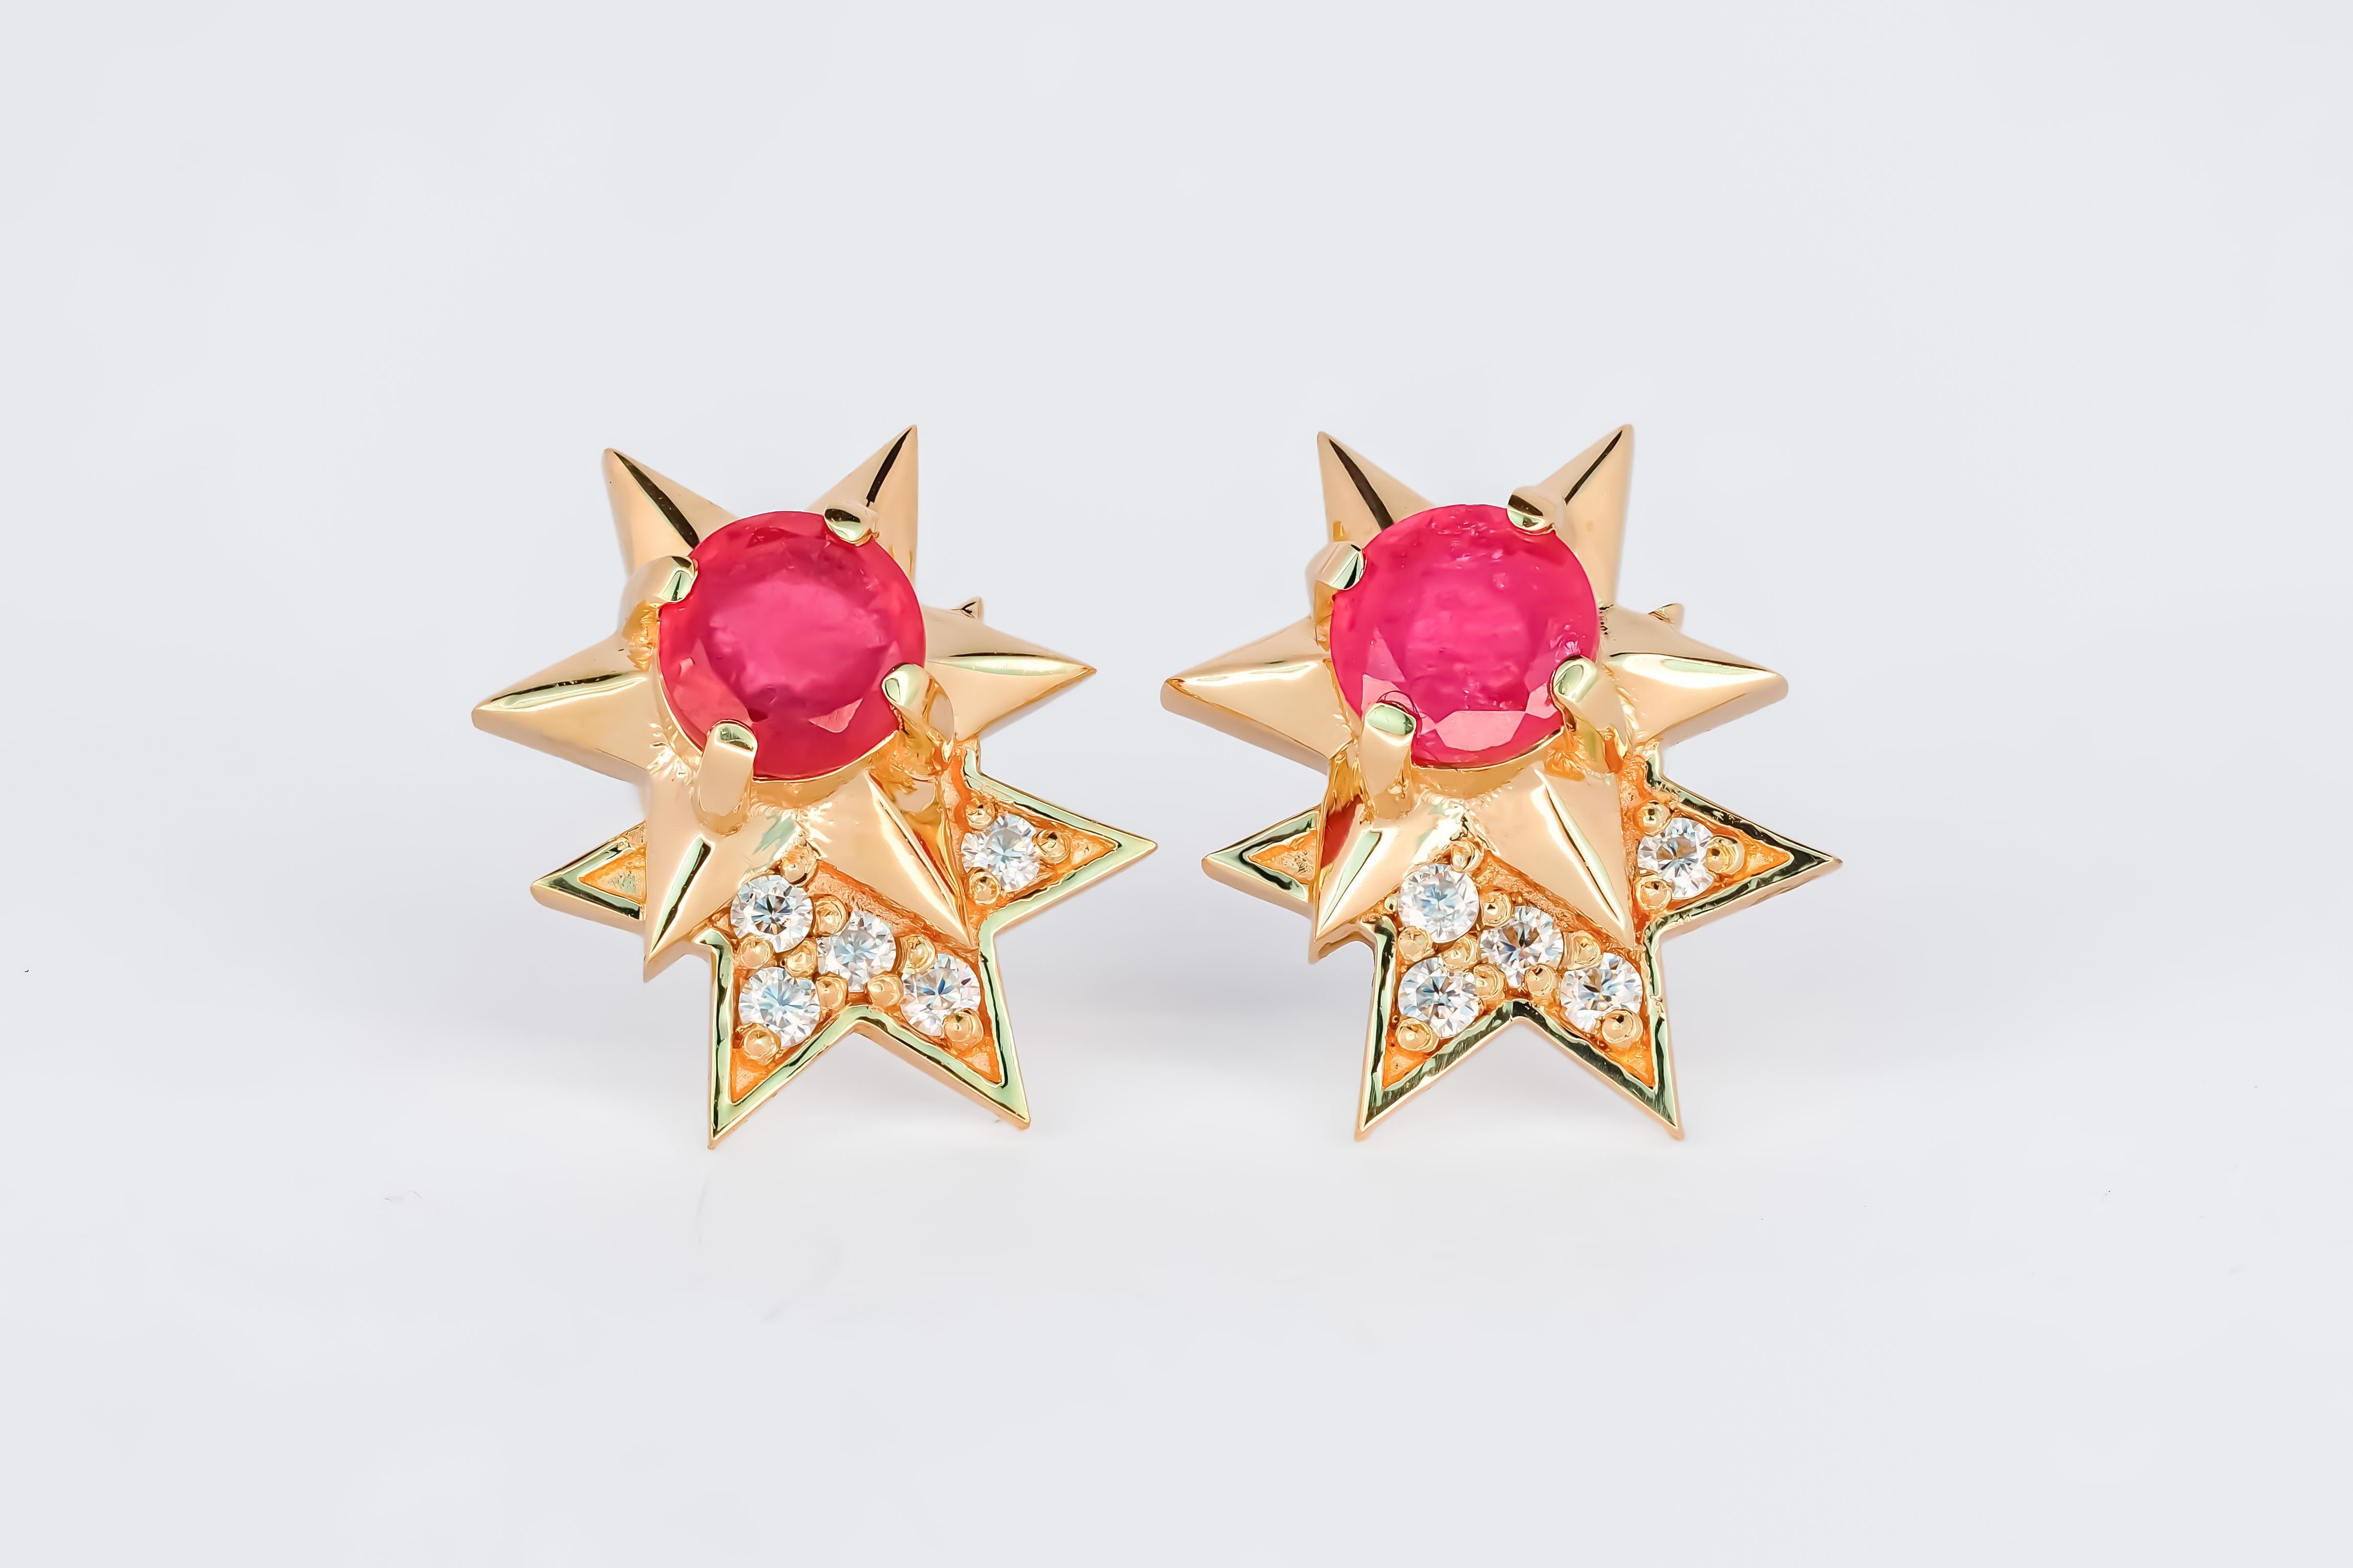 Modern 14 Karat Gold Earrings Studs with Rubies and Diamonds. Ruby stud earrings For Sale